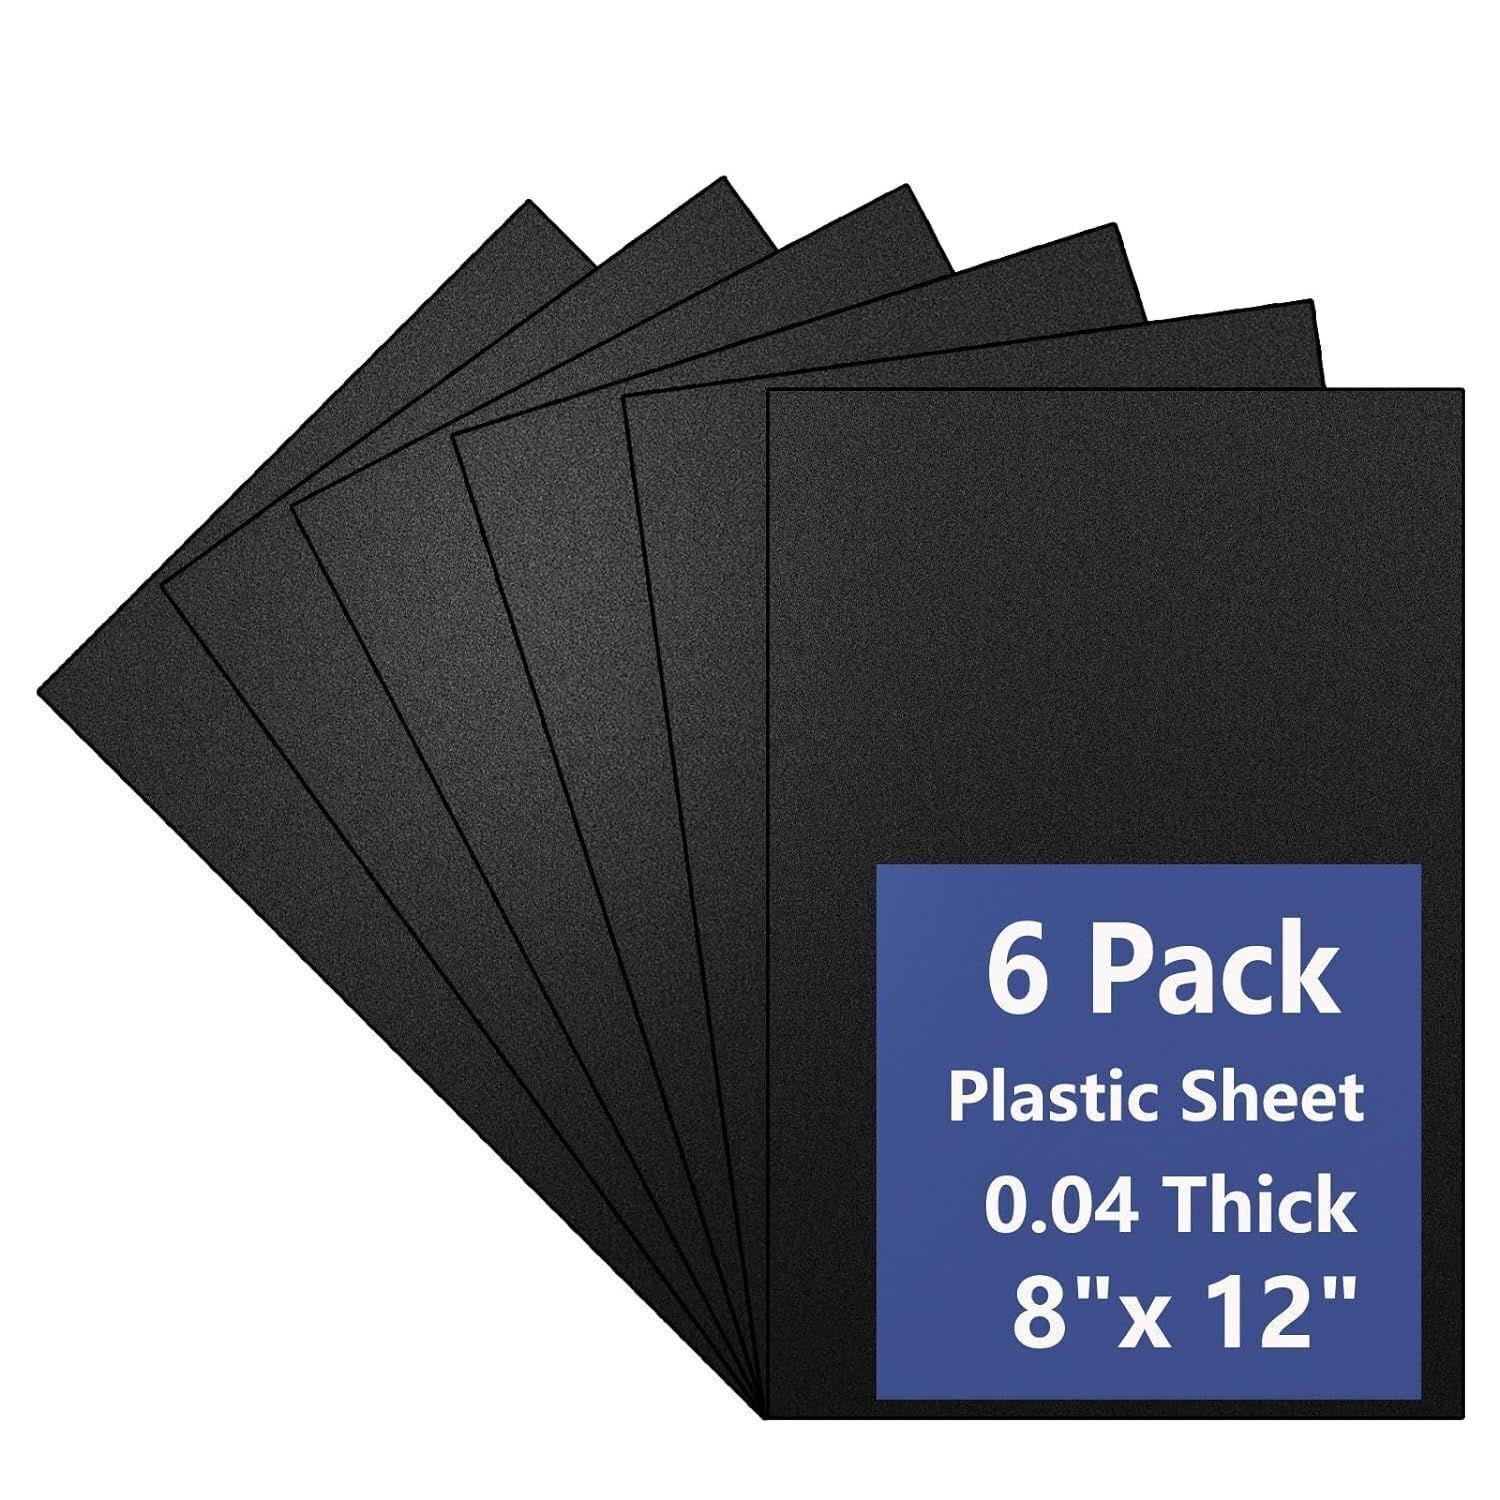 6 Pack Black Plastic Sheets